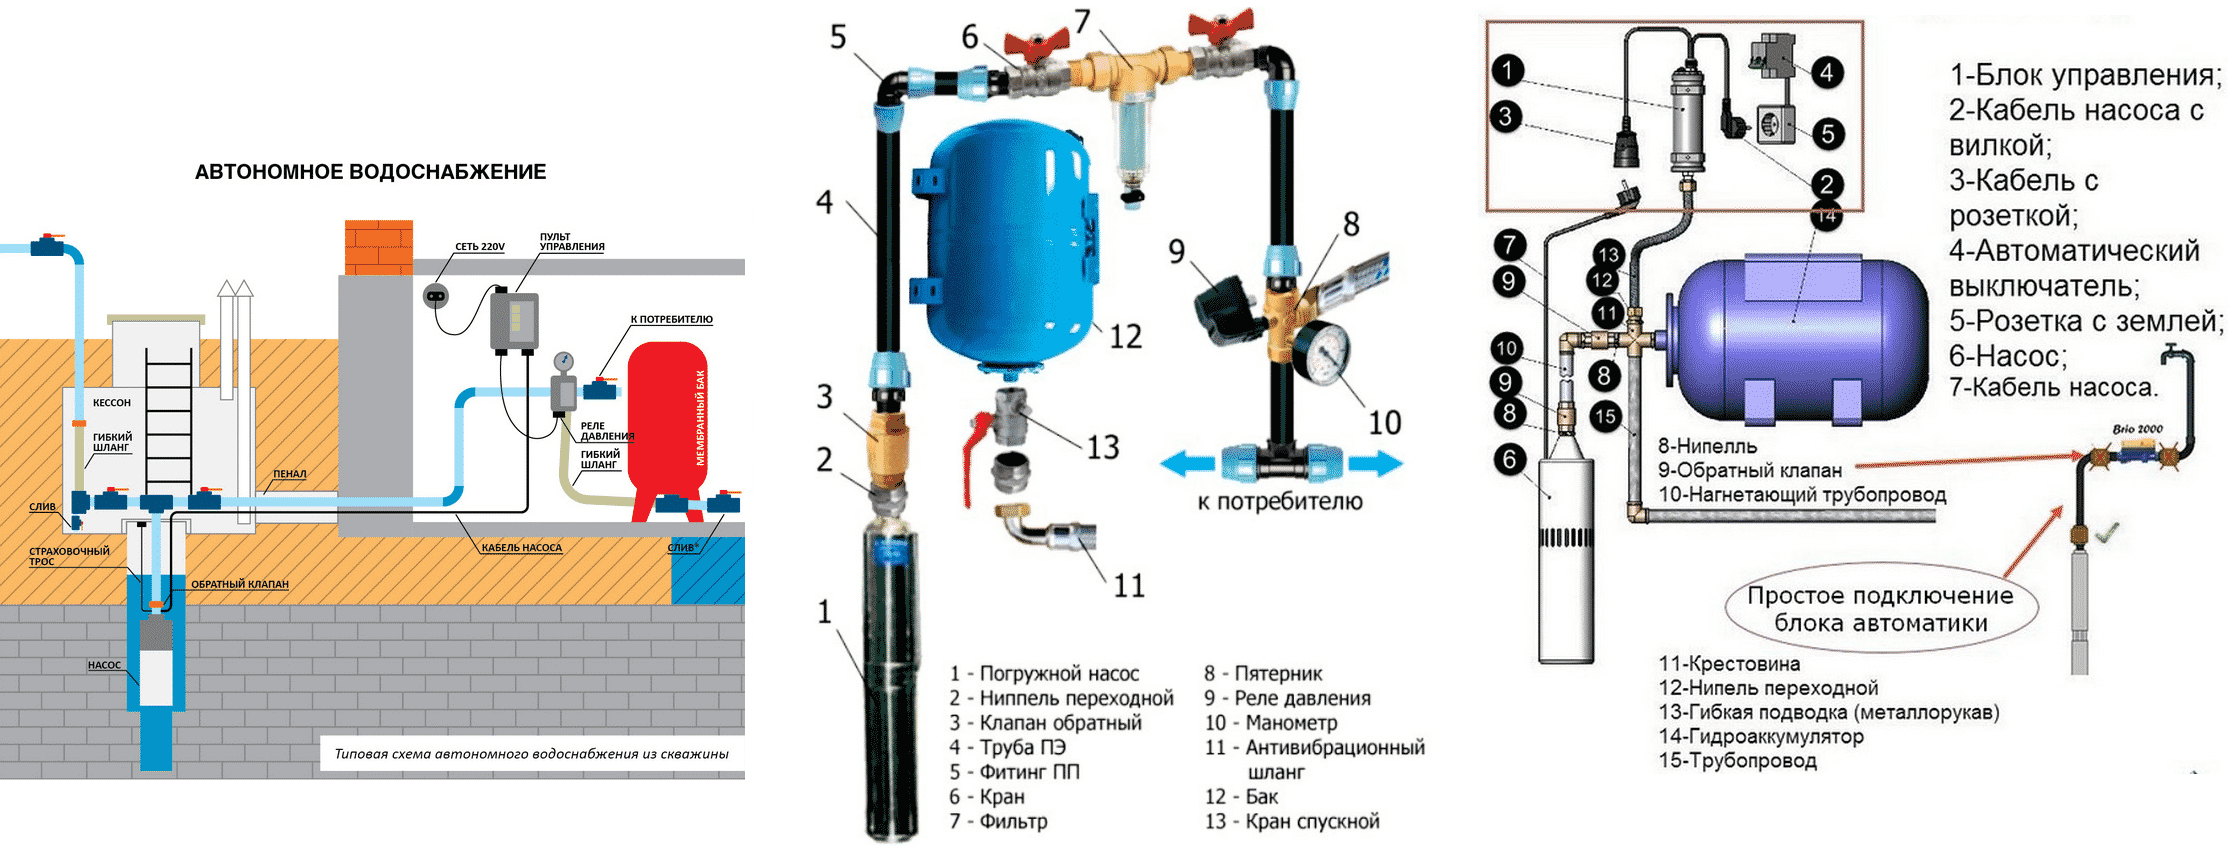 Установка гидроаккумулятора своими руками: виды баков, особенности монтажа, расчет гидроаккумулятора